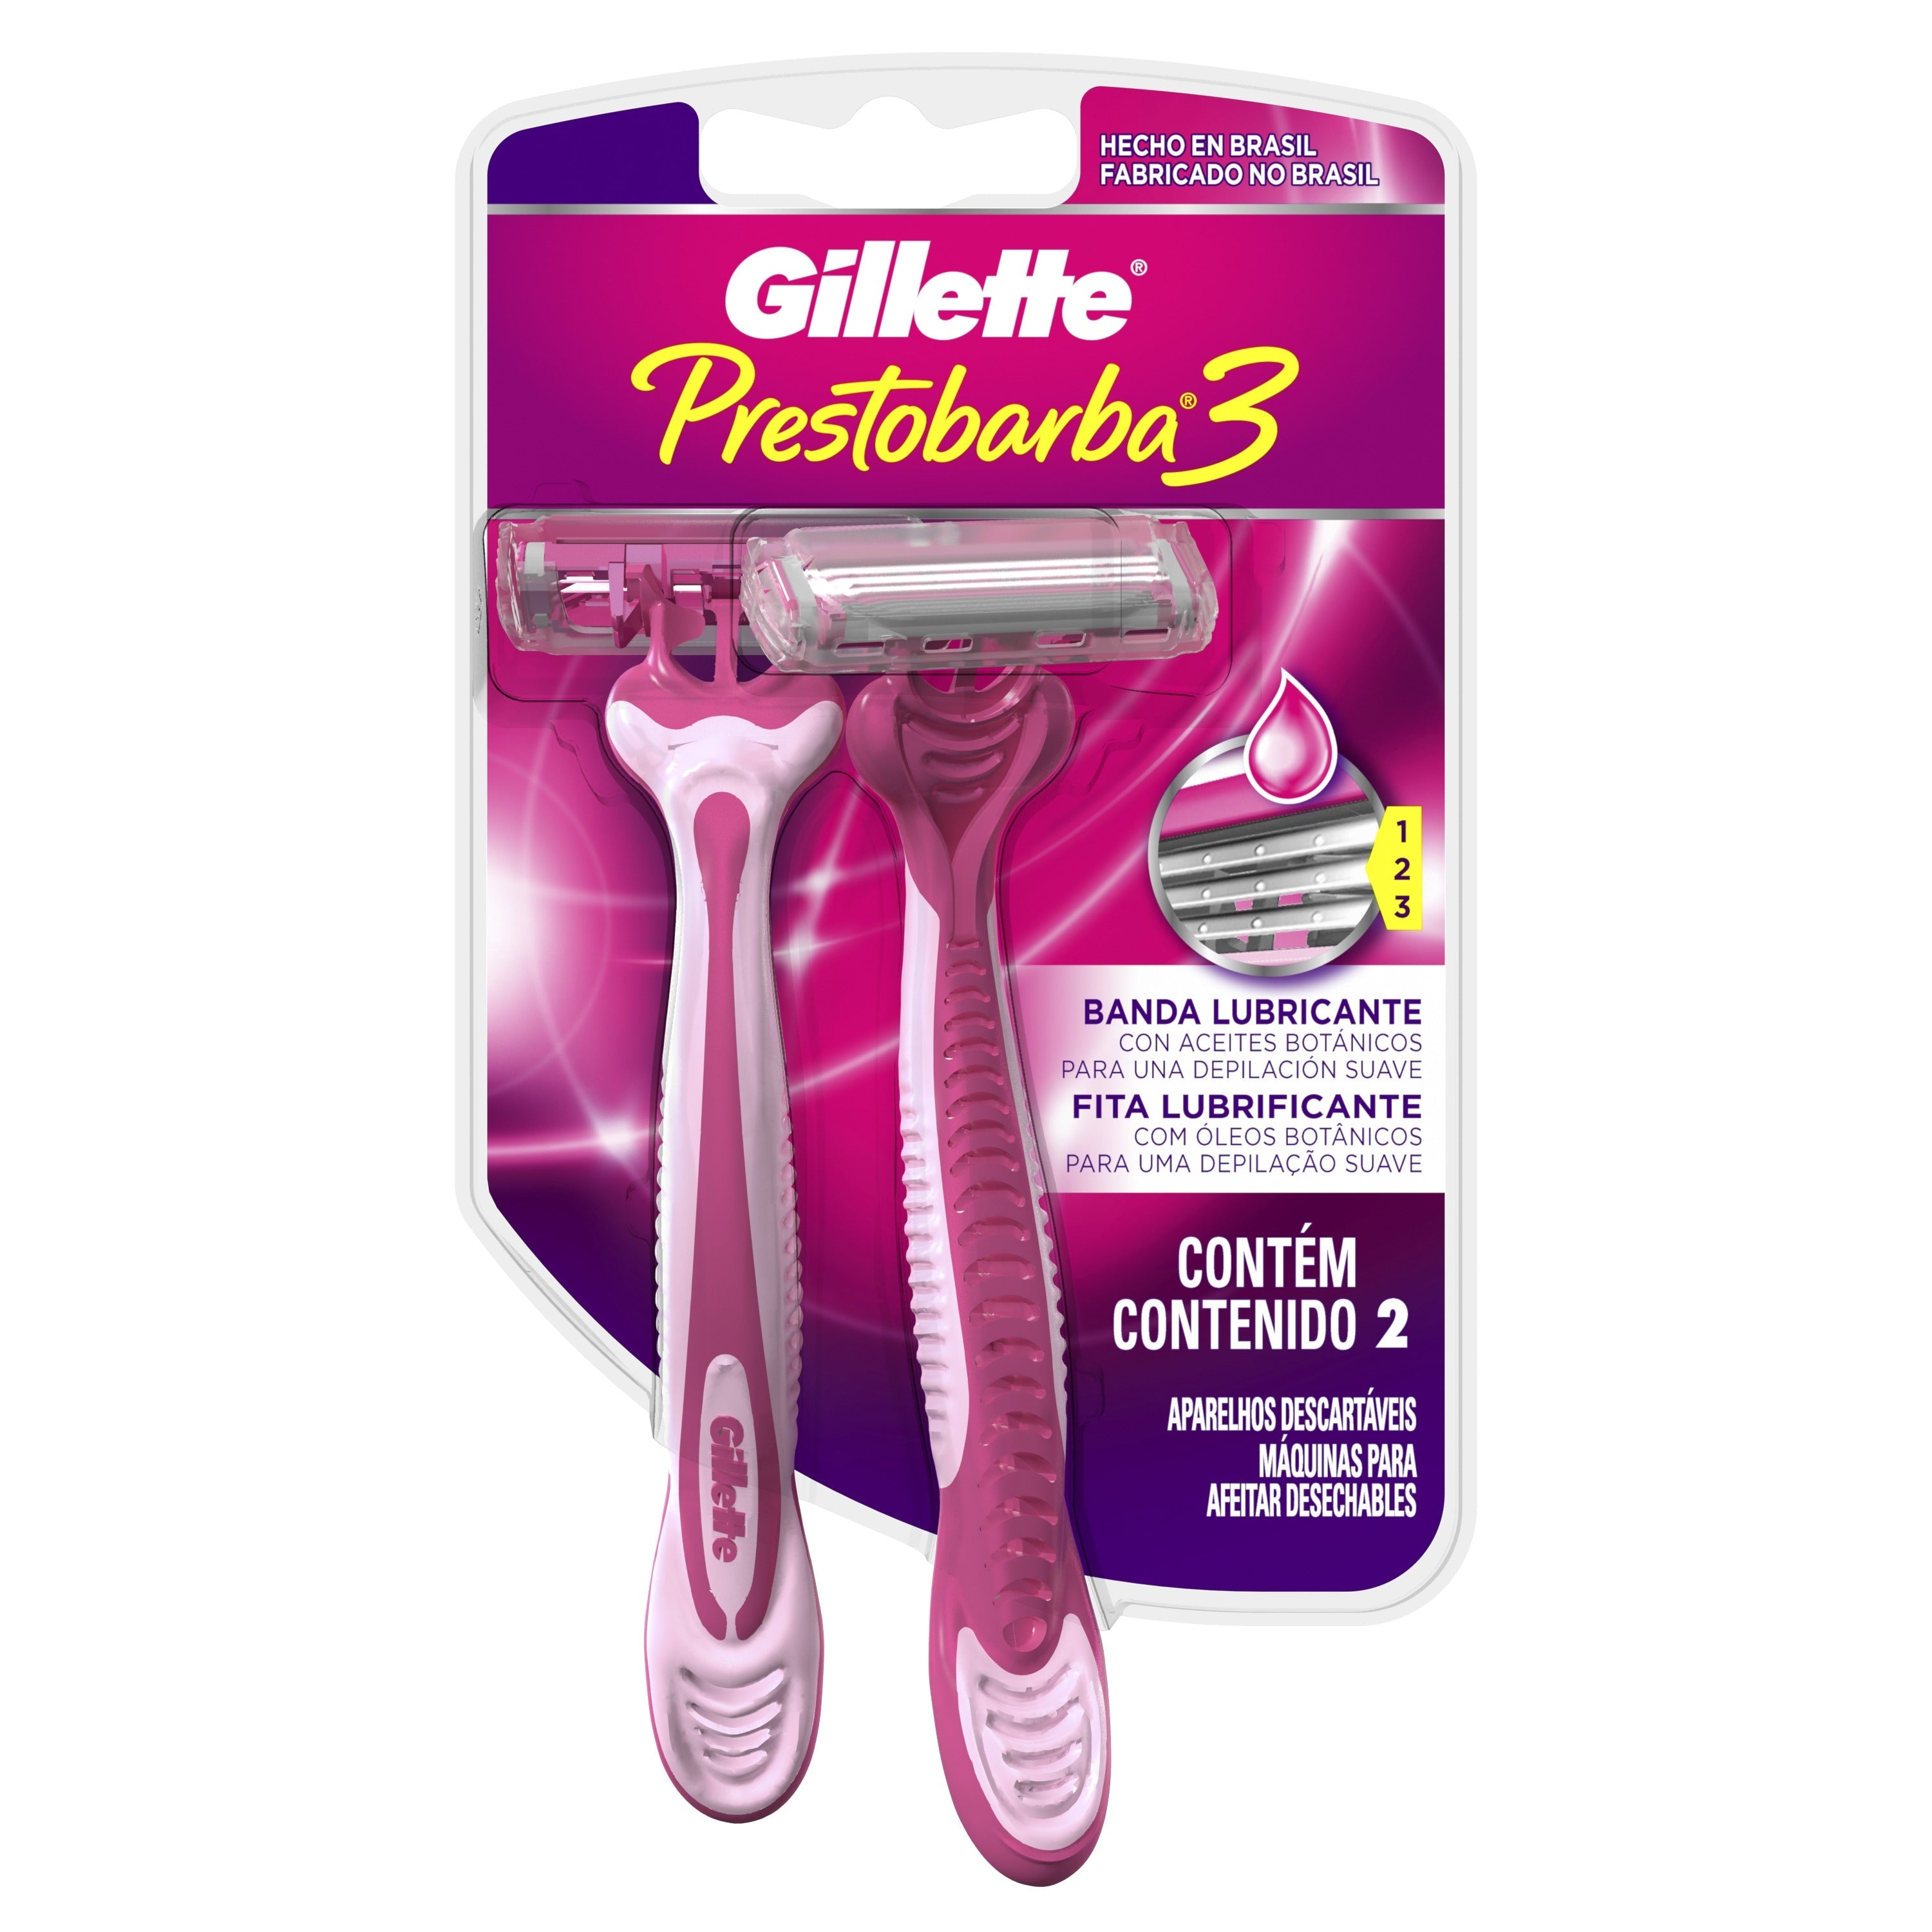 Gillette Prestobarba3 Women's Shavers (2 Units): Ergonomic Handle, Protective Cap, Stainless Steel Blades, Battery Indicator & LED Light